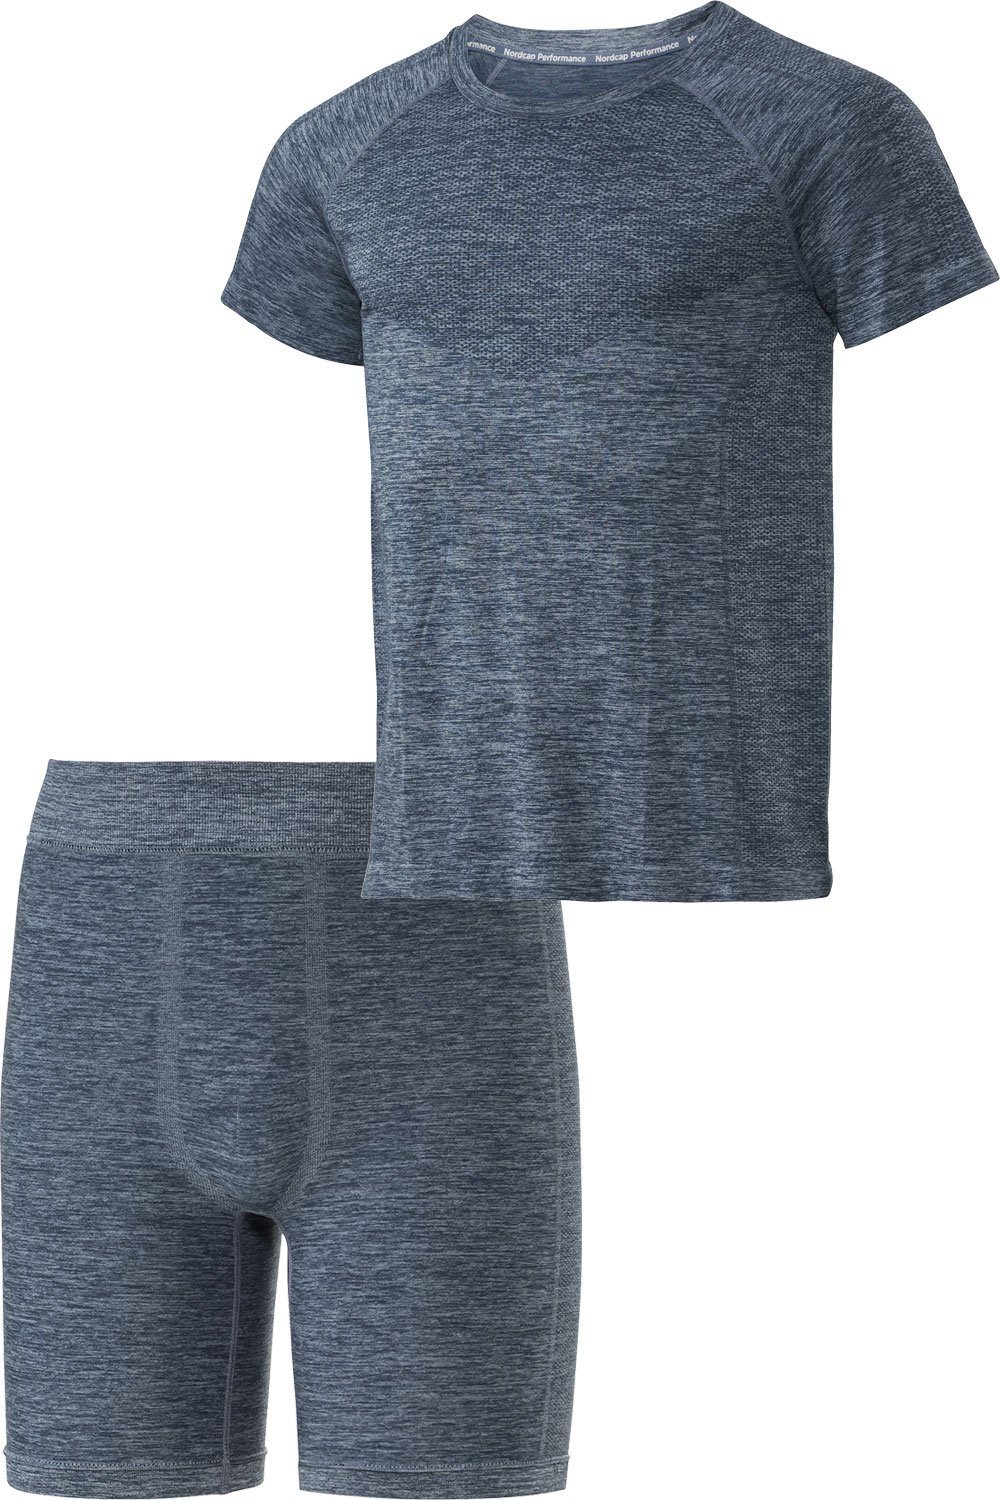 Nordcap Sportanzug (Set, T-Shirt und Shorts), atmungsaktive Funktionswäsche